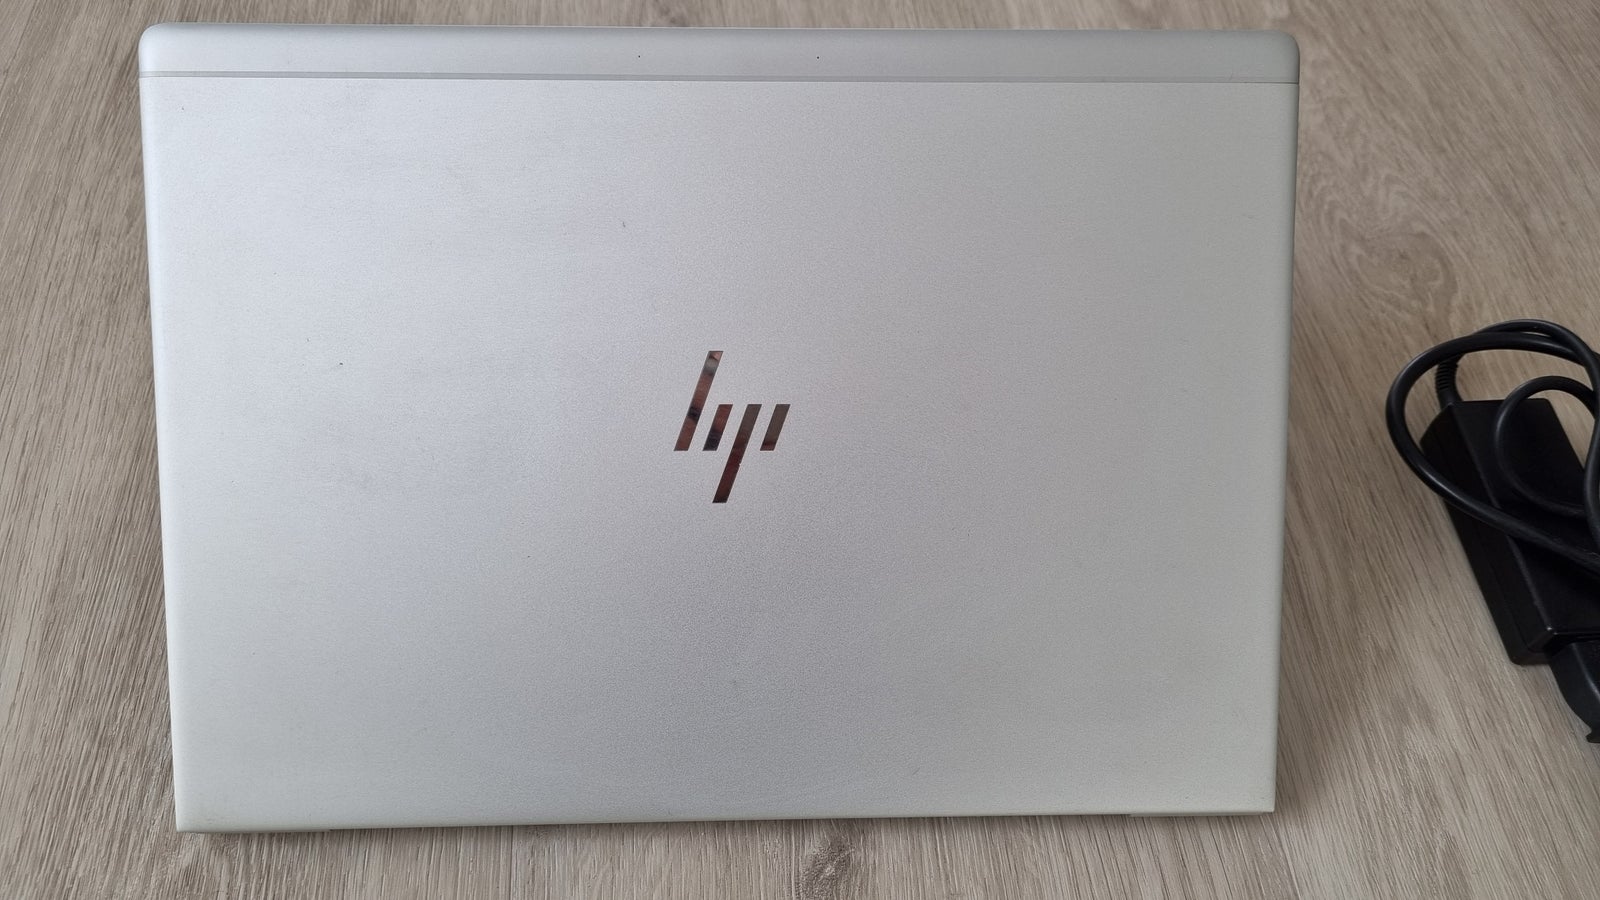 HP EliteBook 840 G5, 3,1 GHz, 16 GB ram